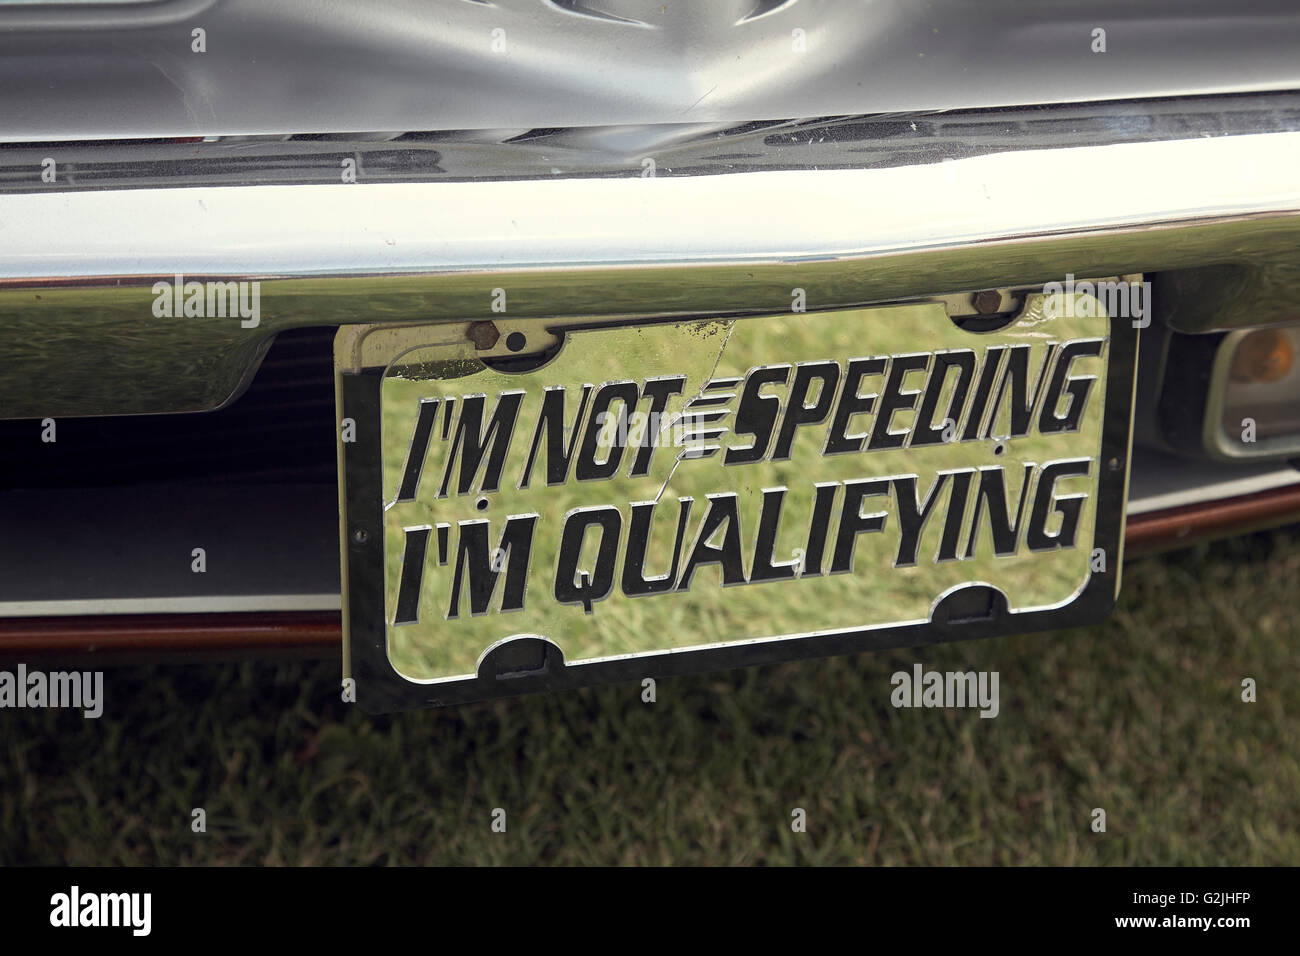 I'm not speeding I'm qualifying sign on a car Stock Photo